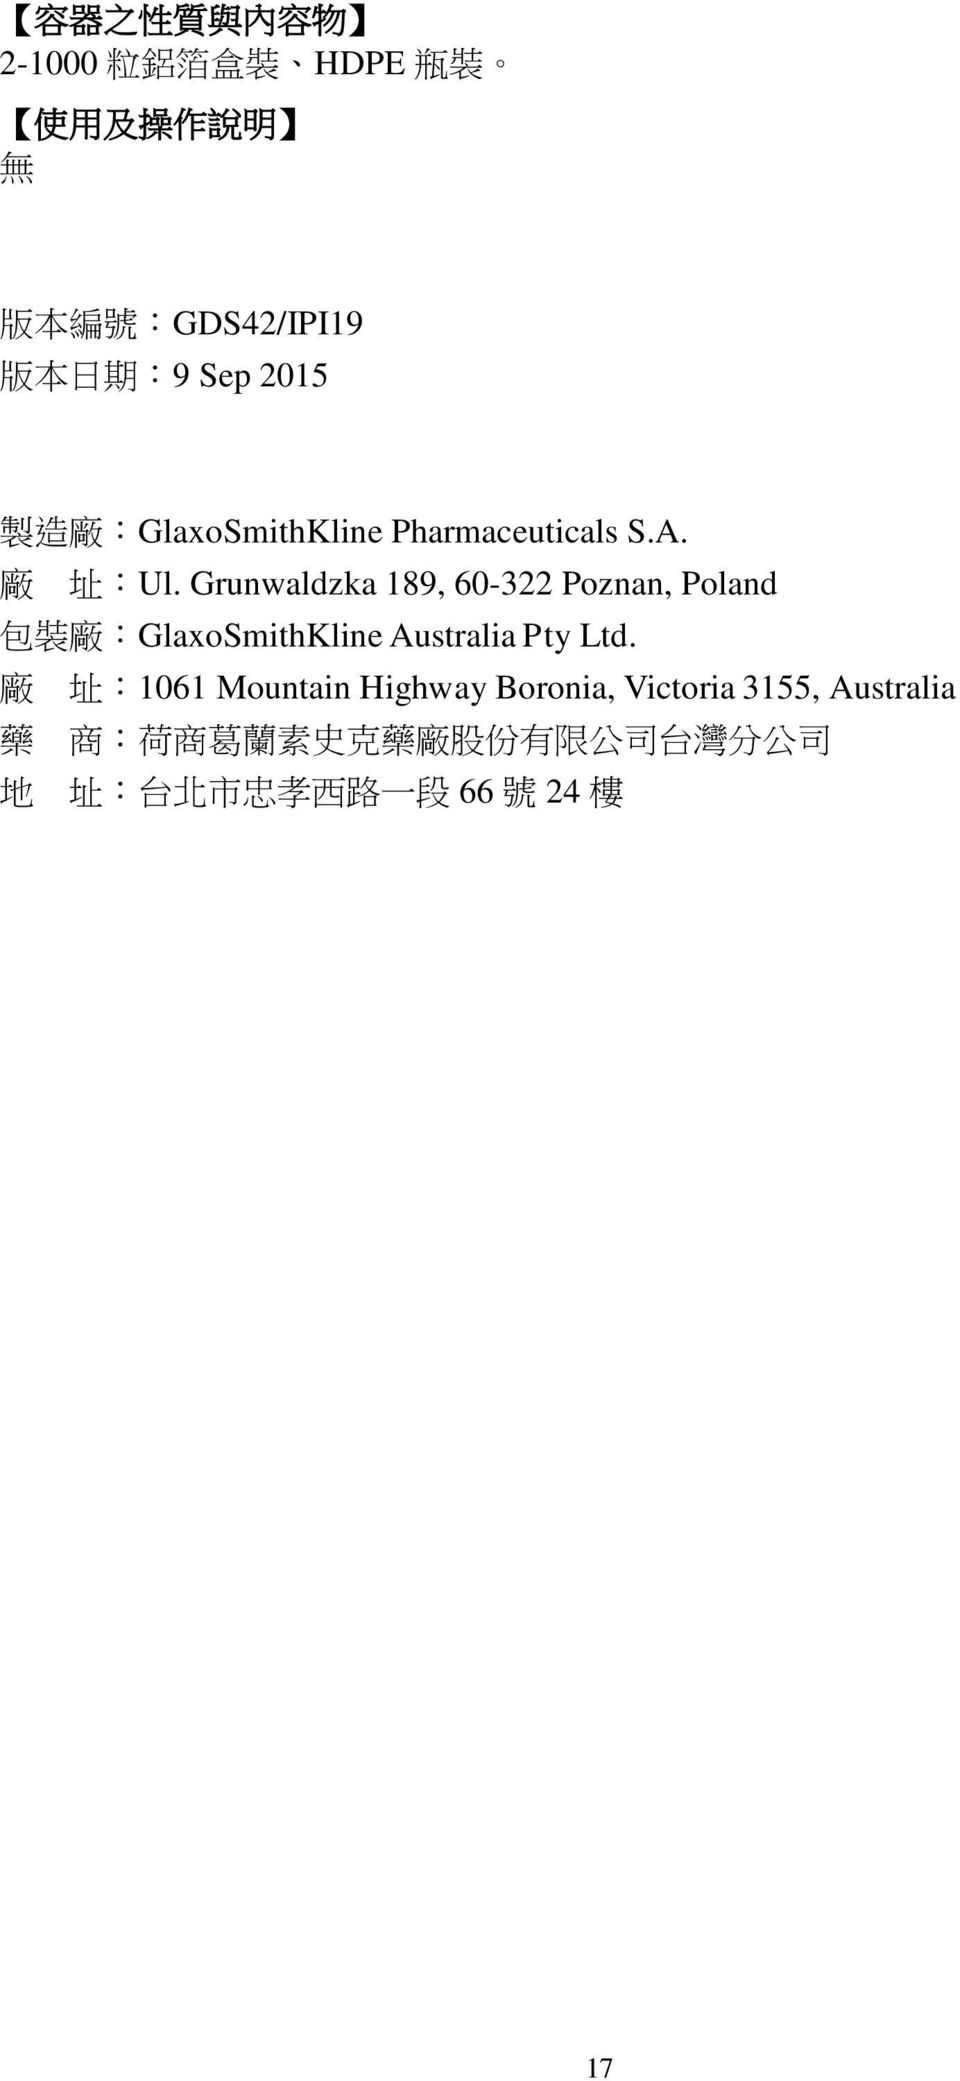 Grunwaldzka 189, 60-322 Poznan, Poland 包 裝 廠 :GlaxoSmithKline Australia Pty Ltd.